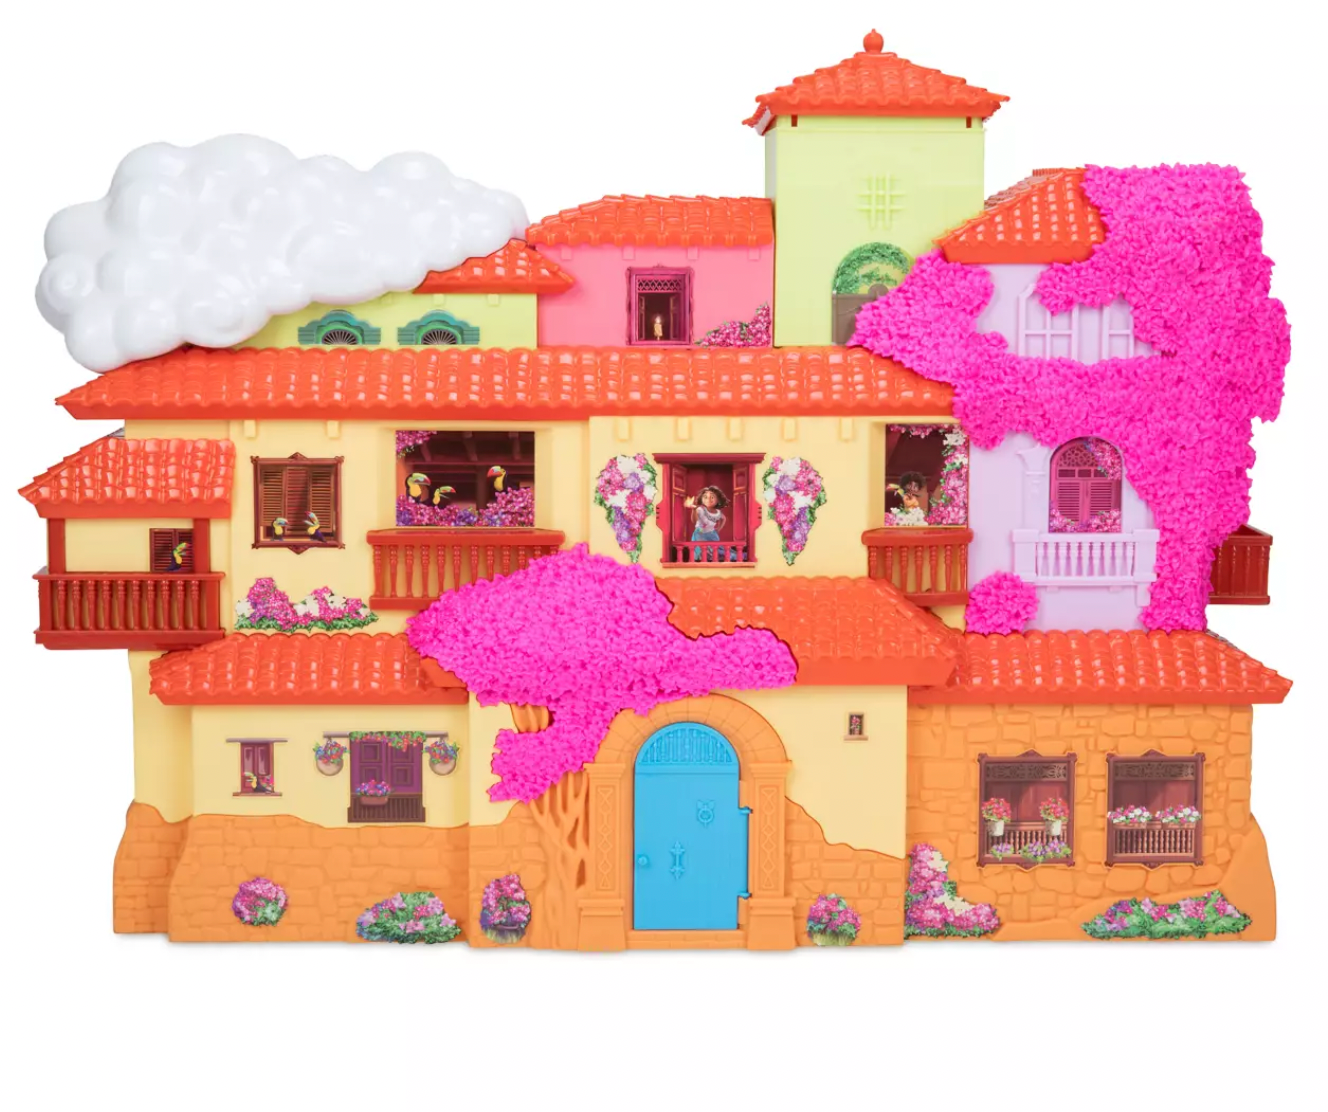 Disney Encanto Magical Casa Madrigal Play Set Toy New with Box